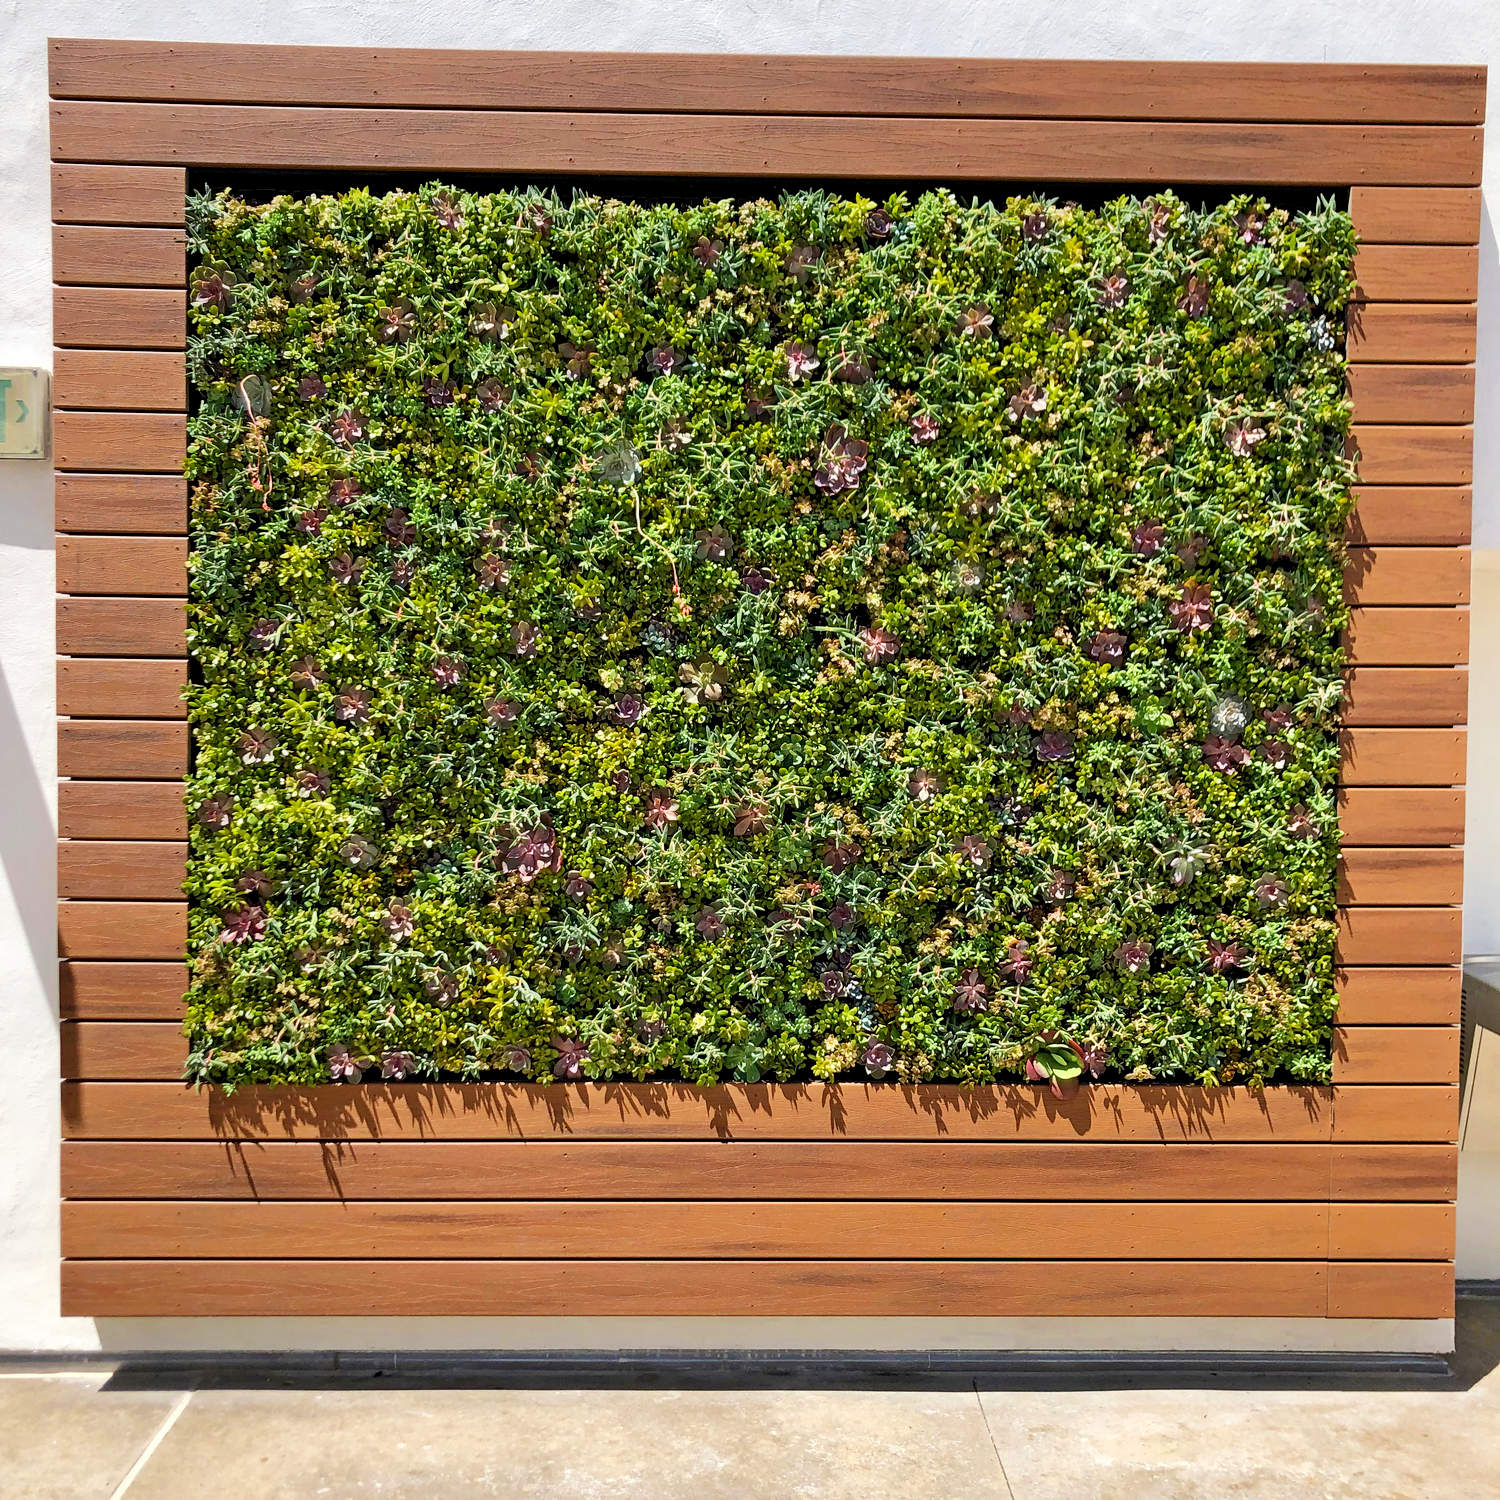 SDSU – Succulent Plant Wall